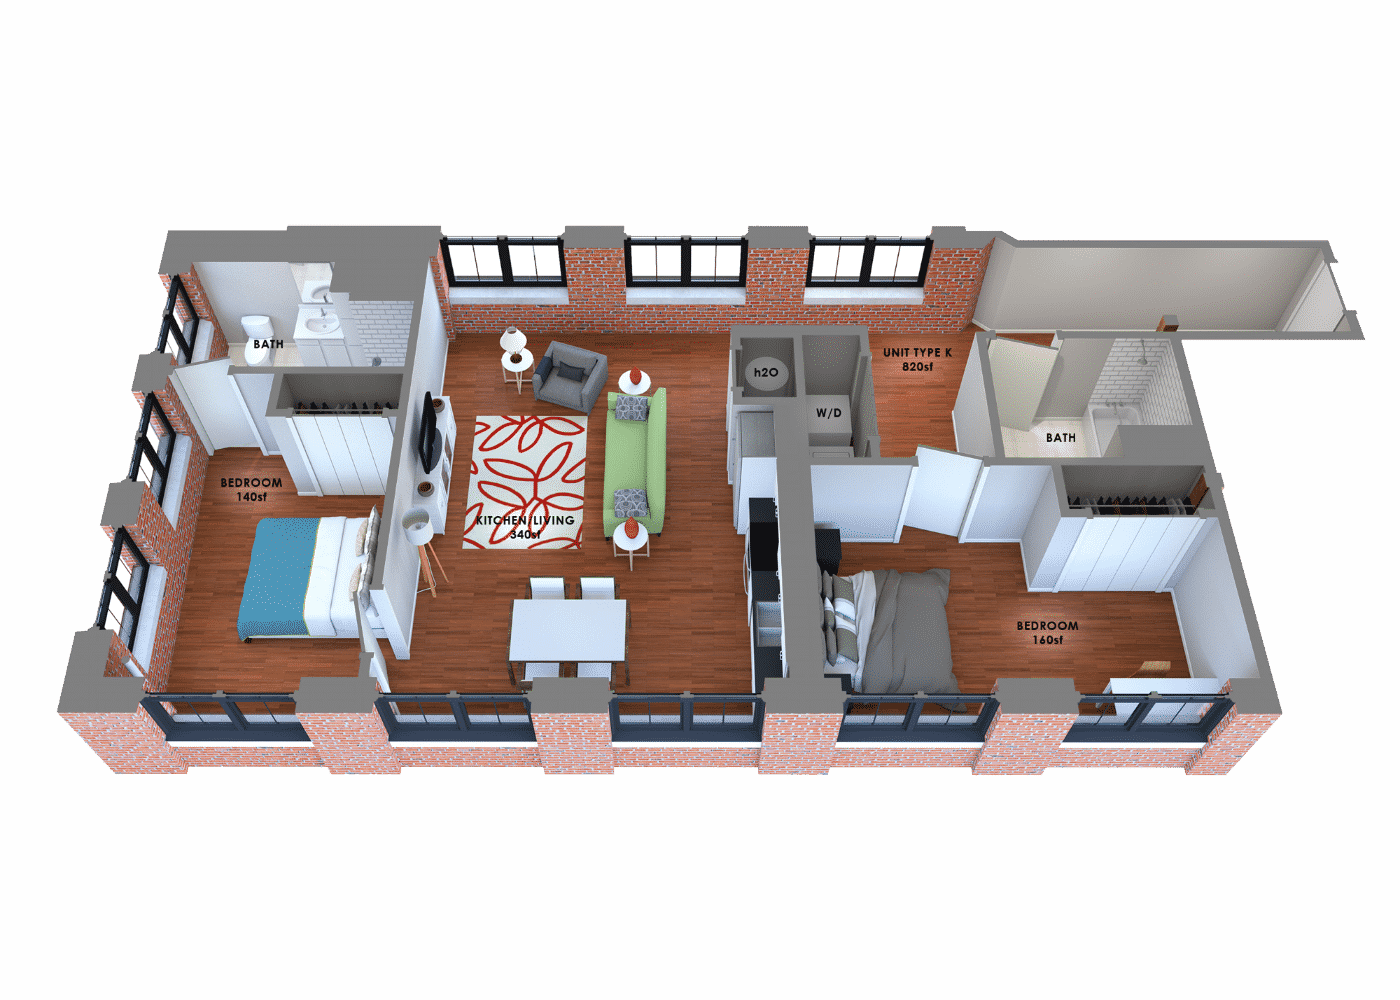 95 Lofts 2 bedroom 820 square feet